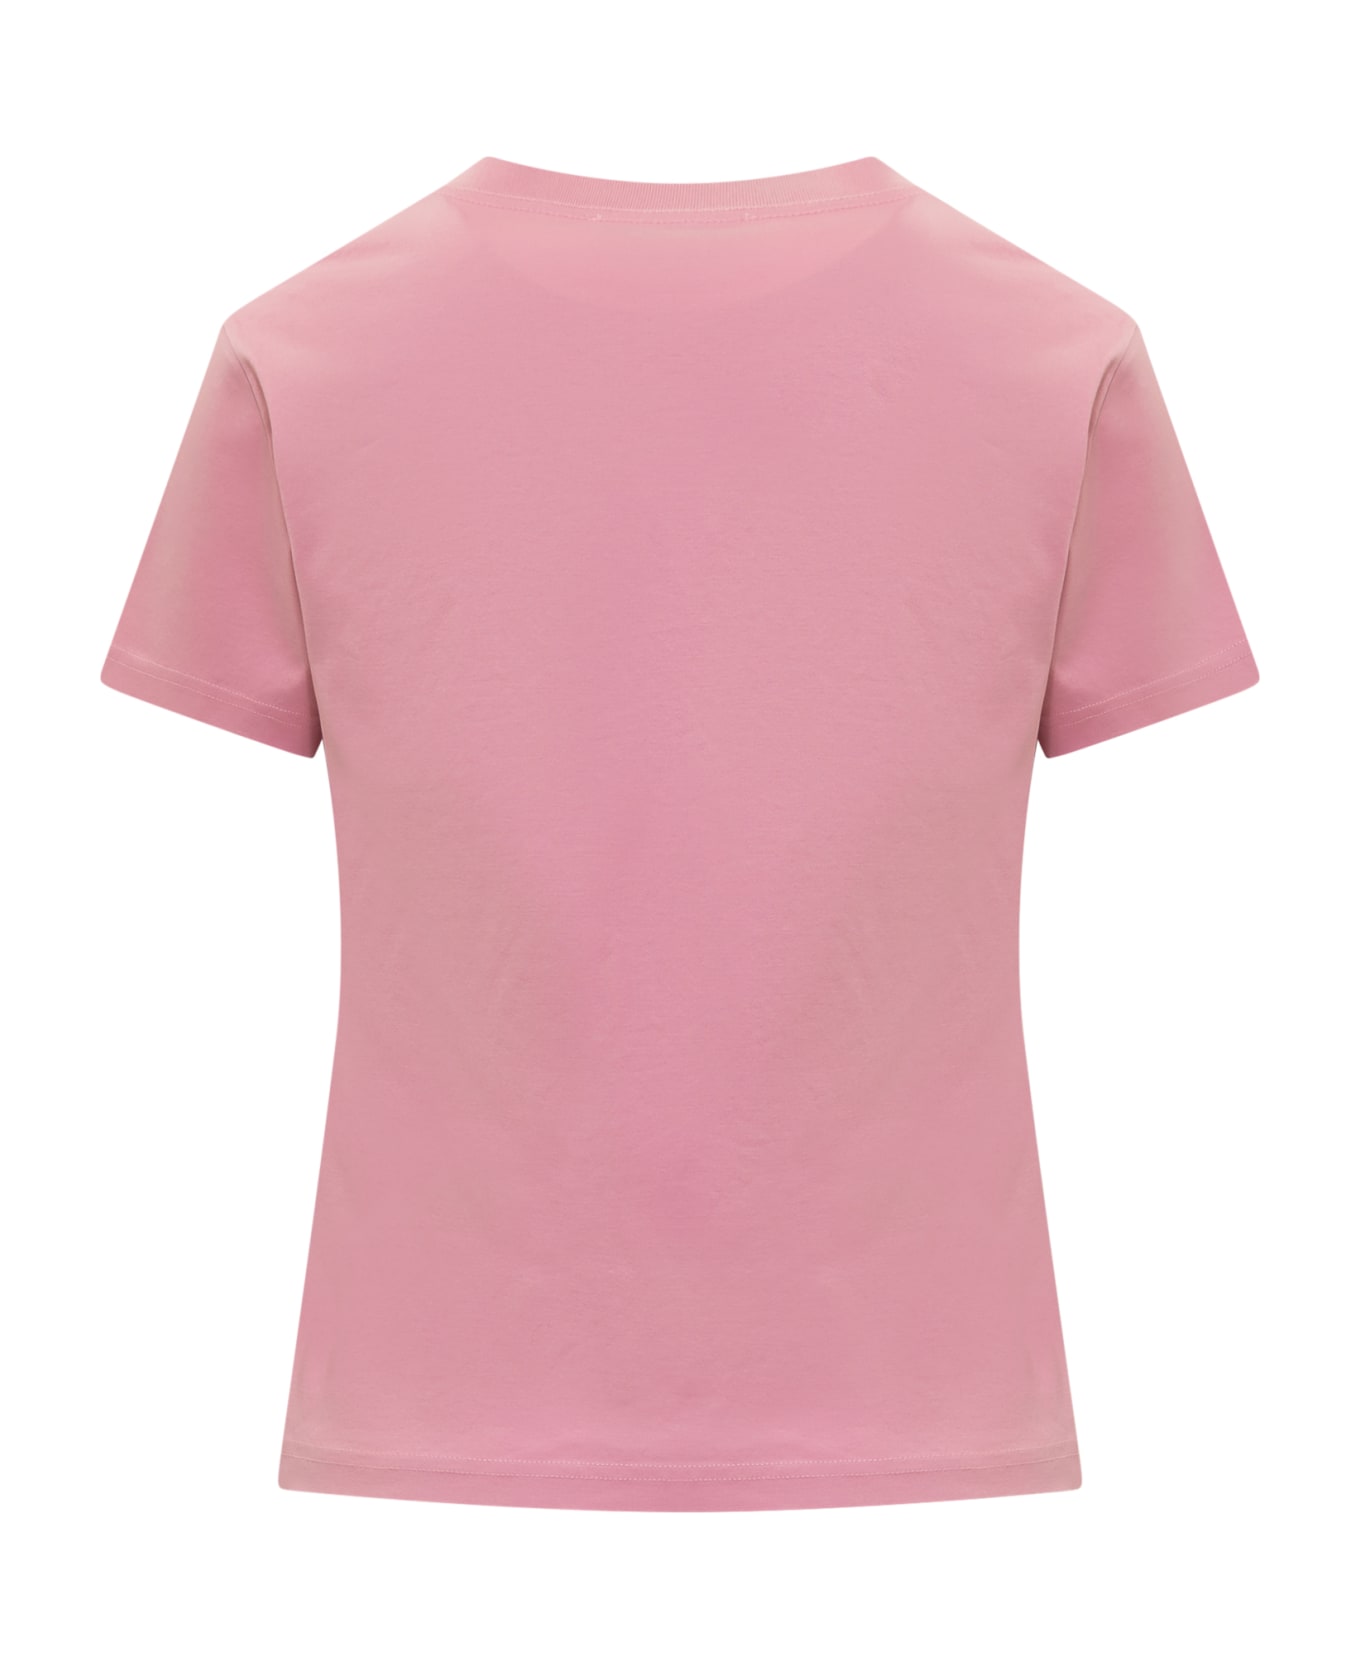 Lanvin Curb T-shirt - Peony Pink Tシャツ